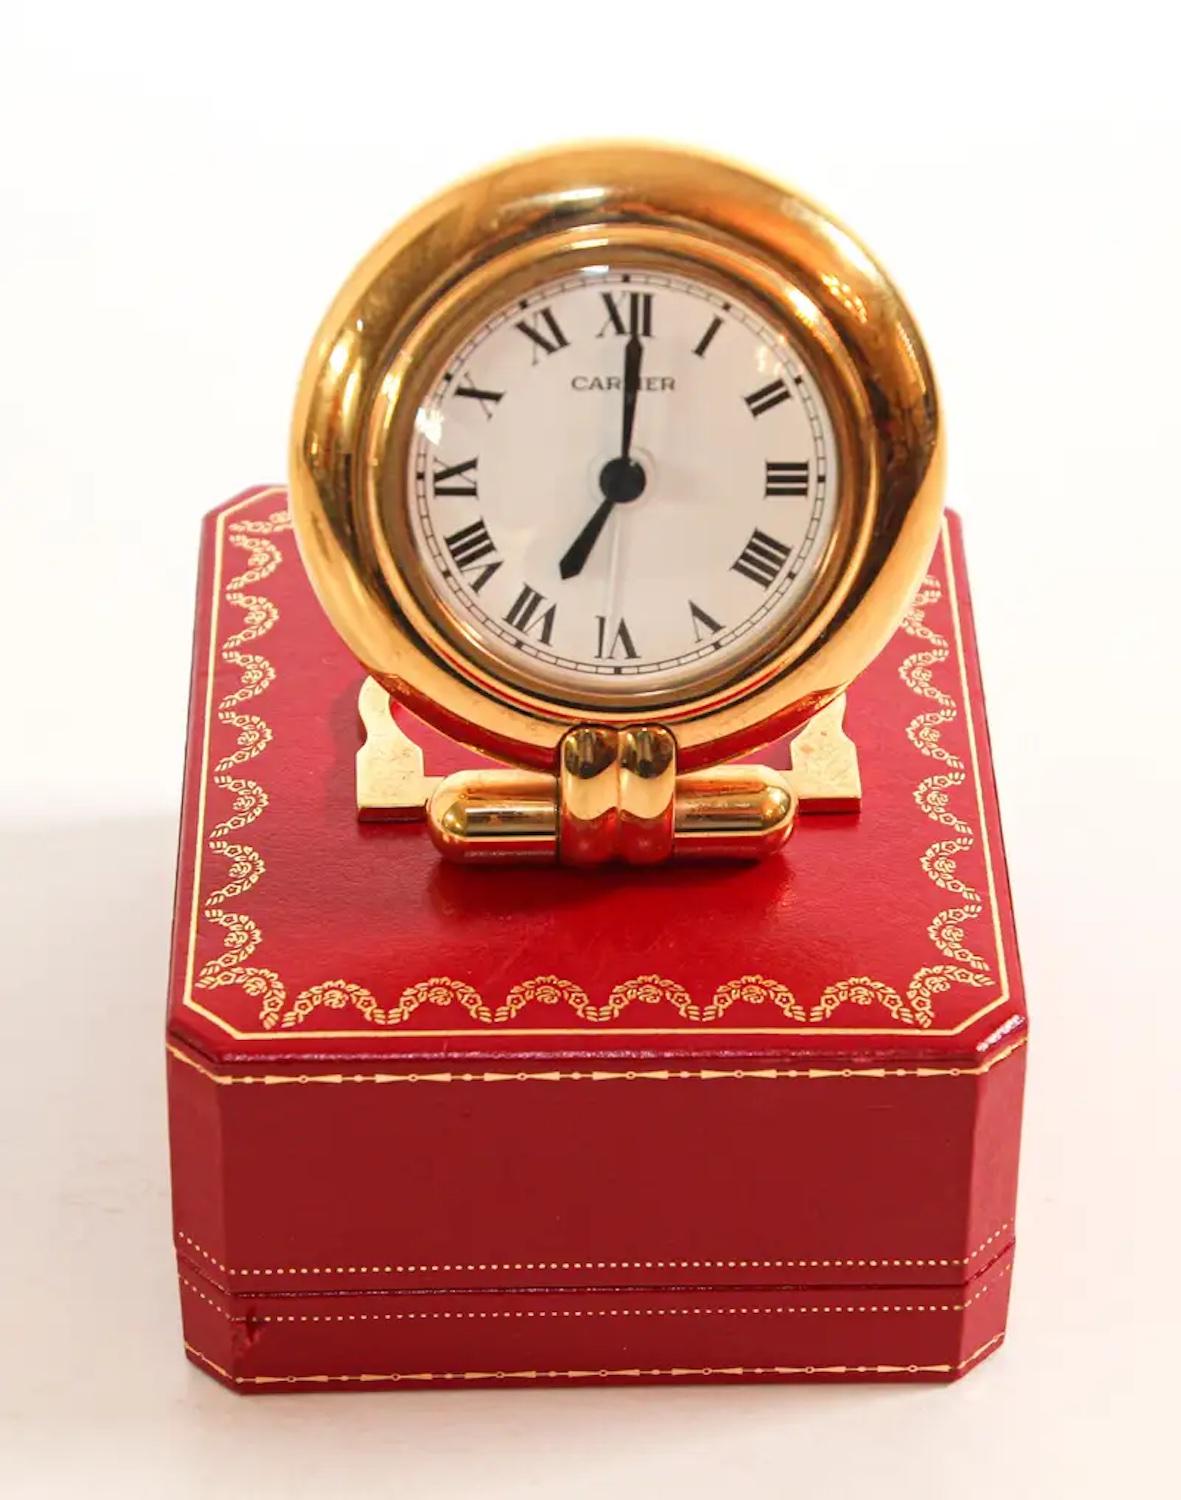 Vintage Cartier 24-karat gold-plated Art Deco travel quartz desk clock with alarm.
Cartier 24-karat gold-plated and lapis lazuli quartz travel or desk accessory clock is no longer being made.
It is vintage from the 1990s. It was originally designed